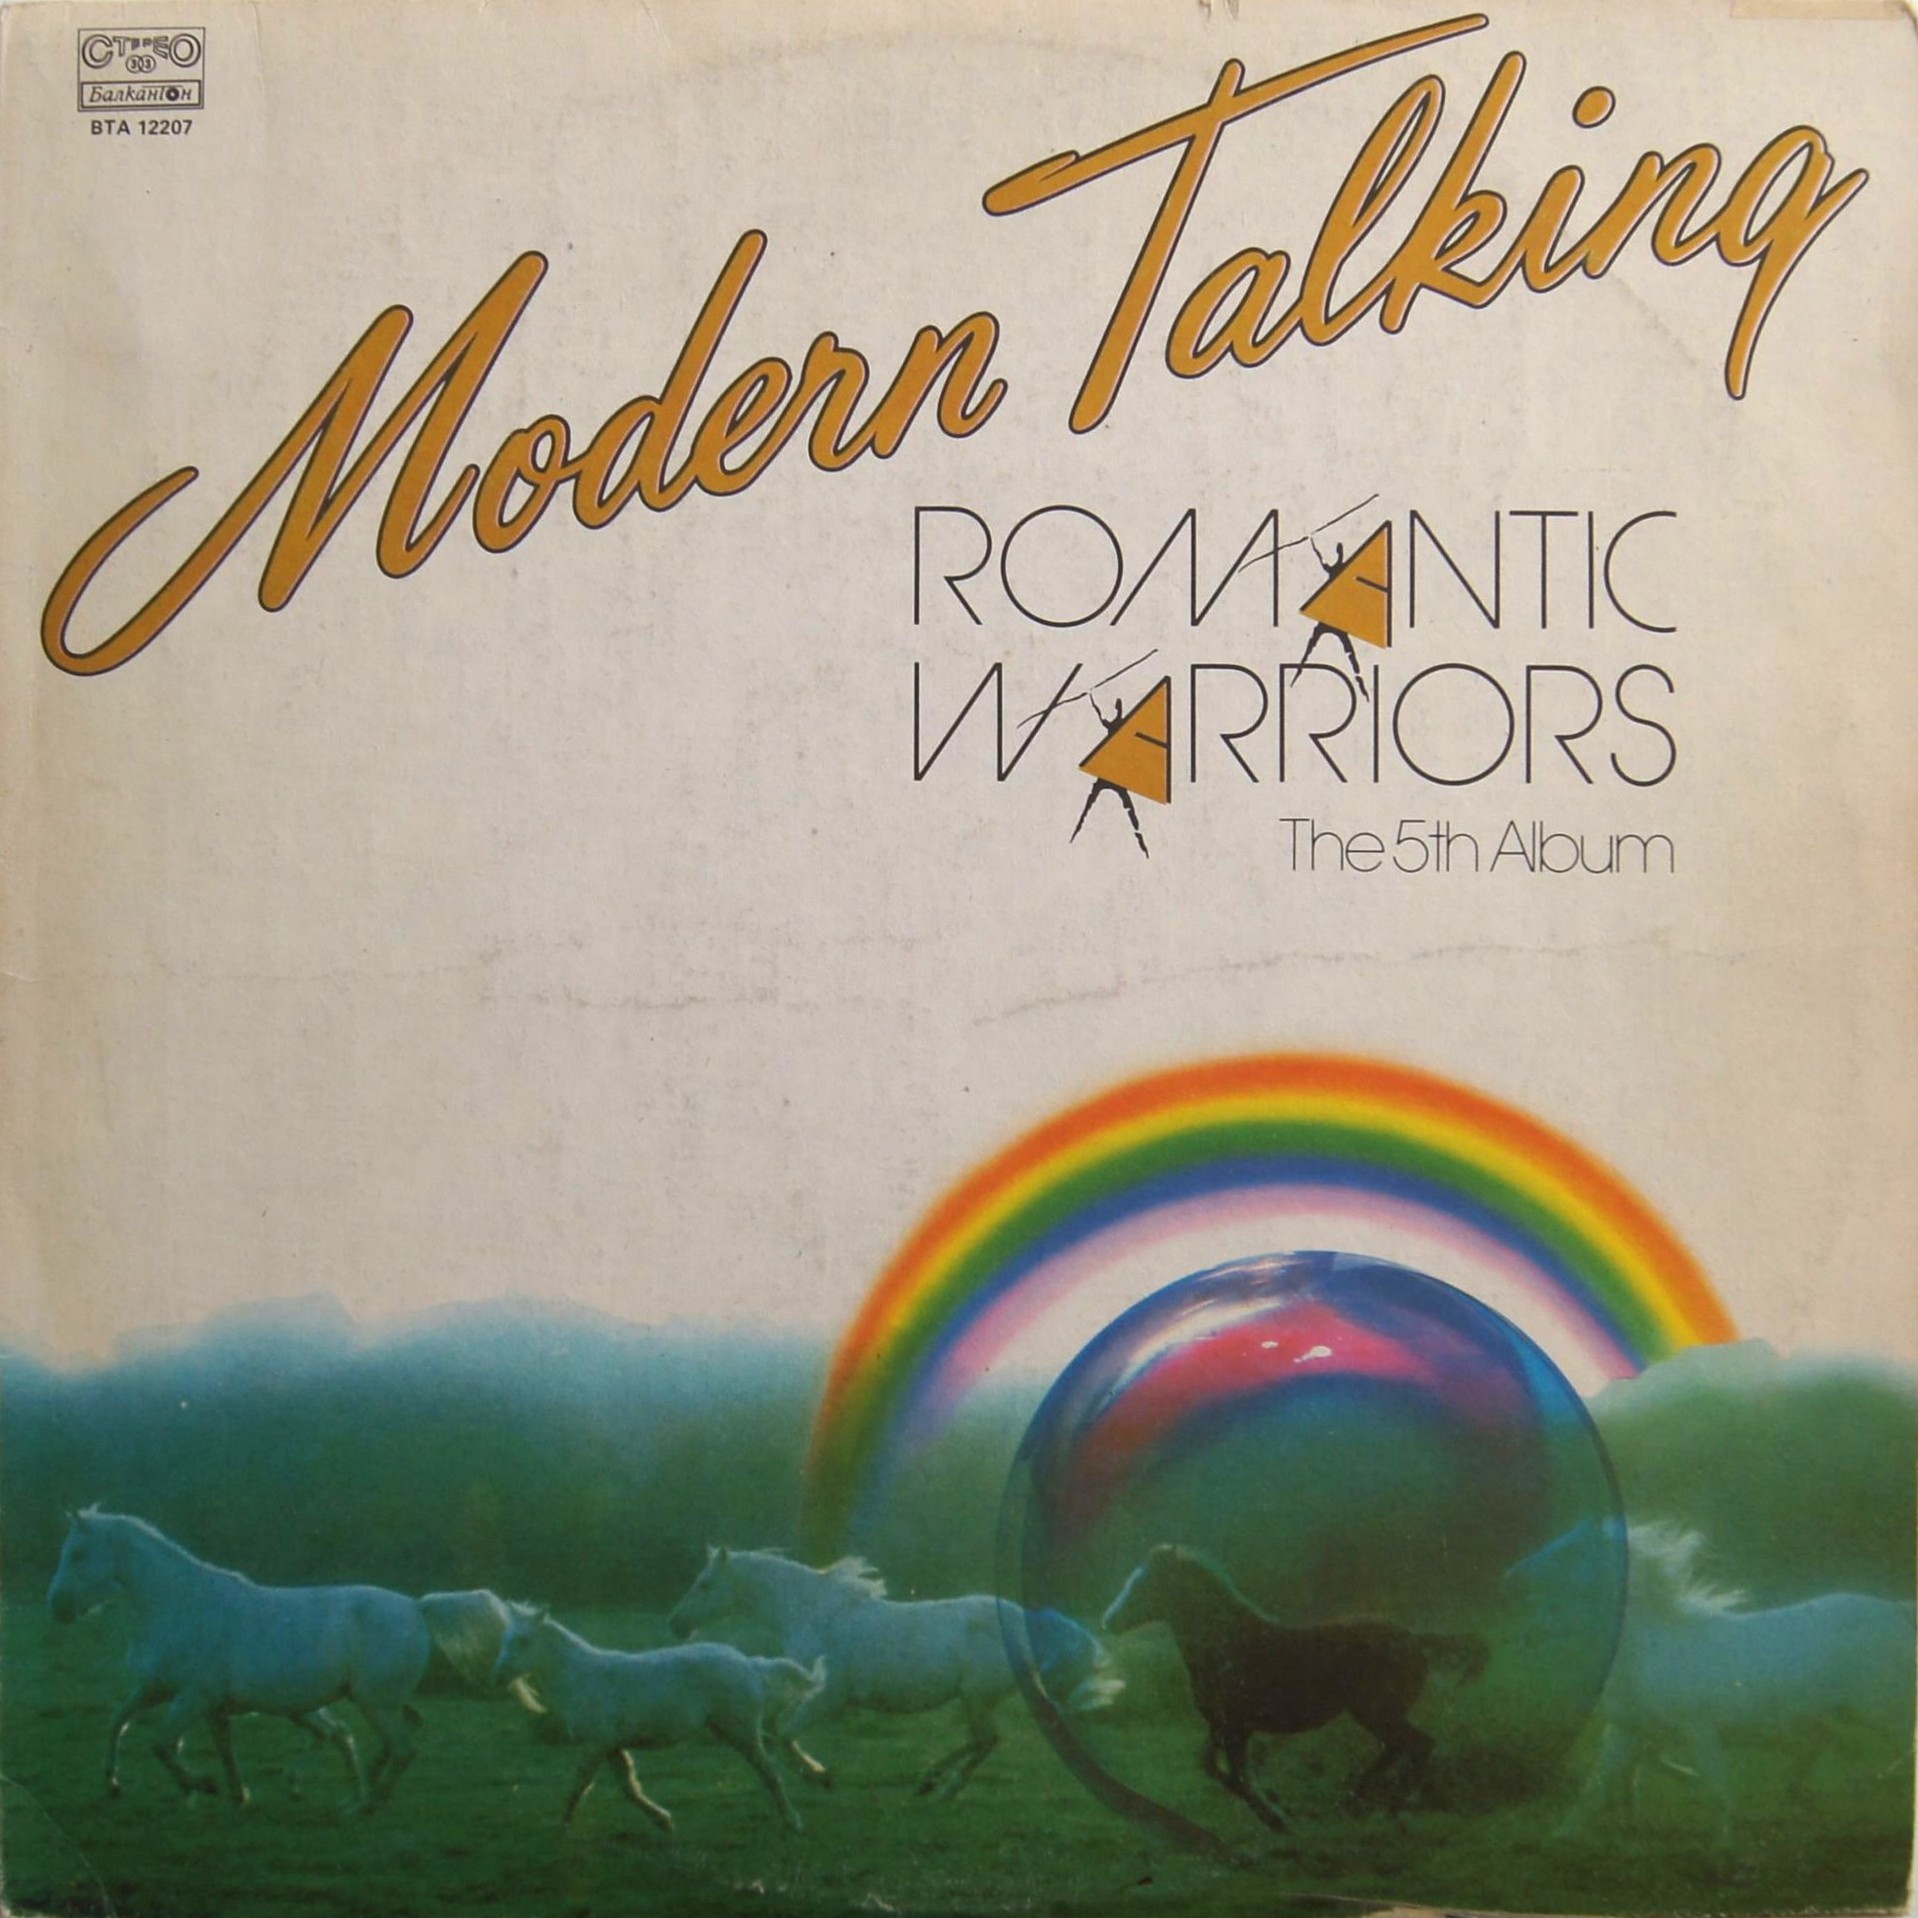 MODERN TALKING. Romantic Warriors (5th album)